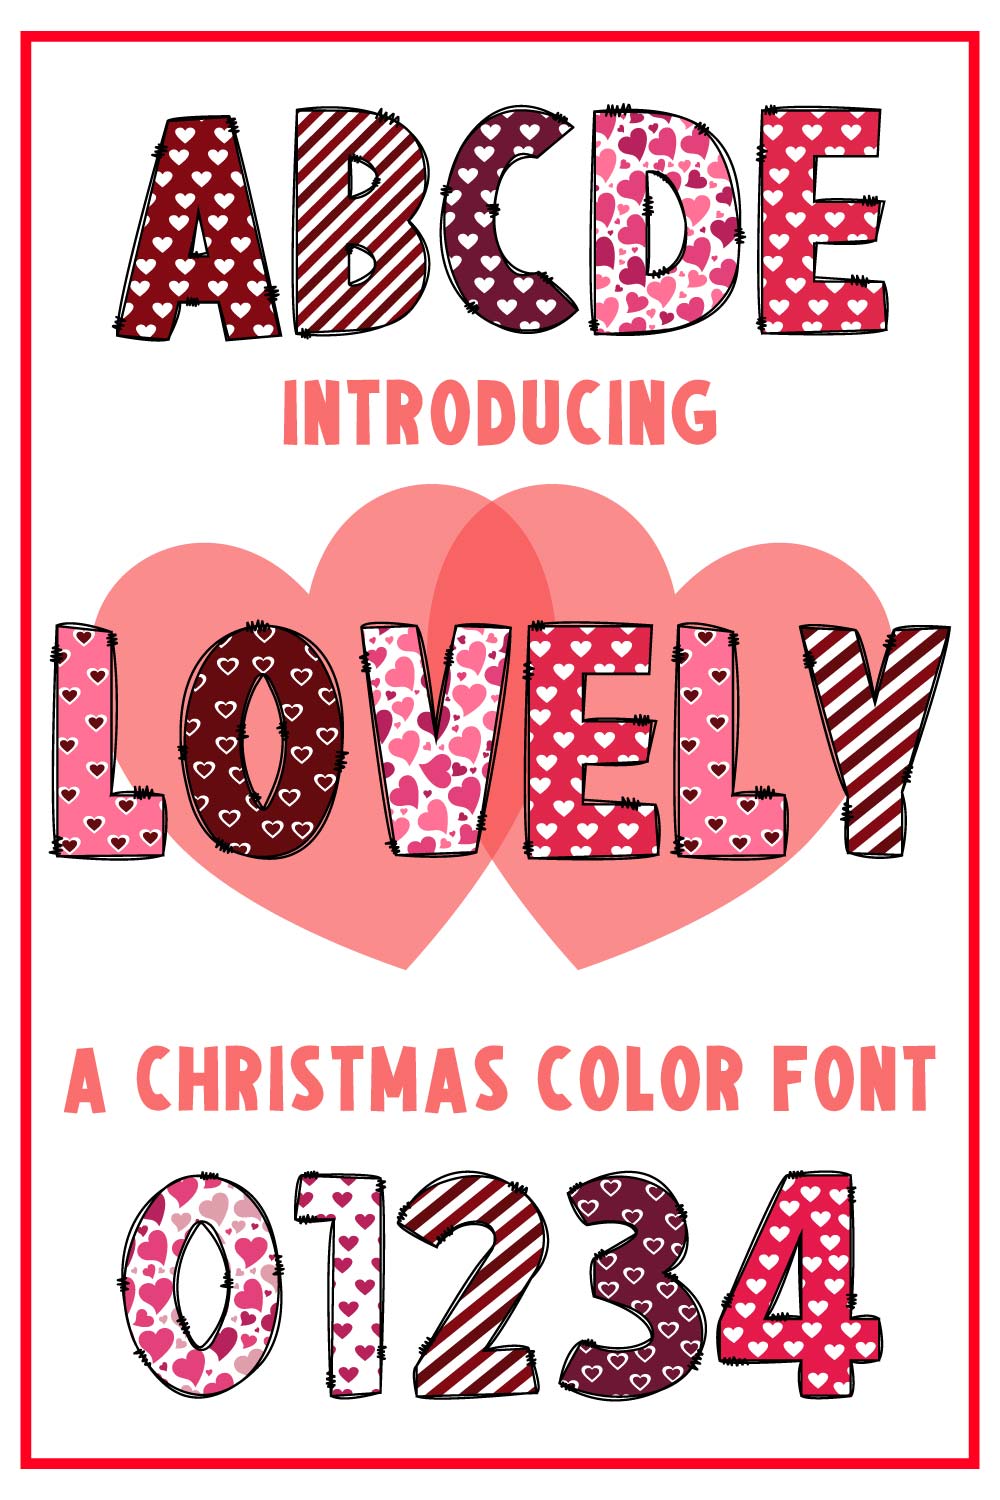 Lovely Color Font - pinterest image preview.